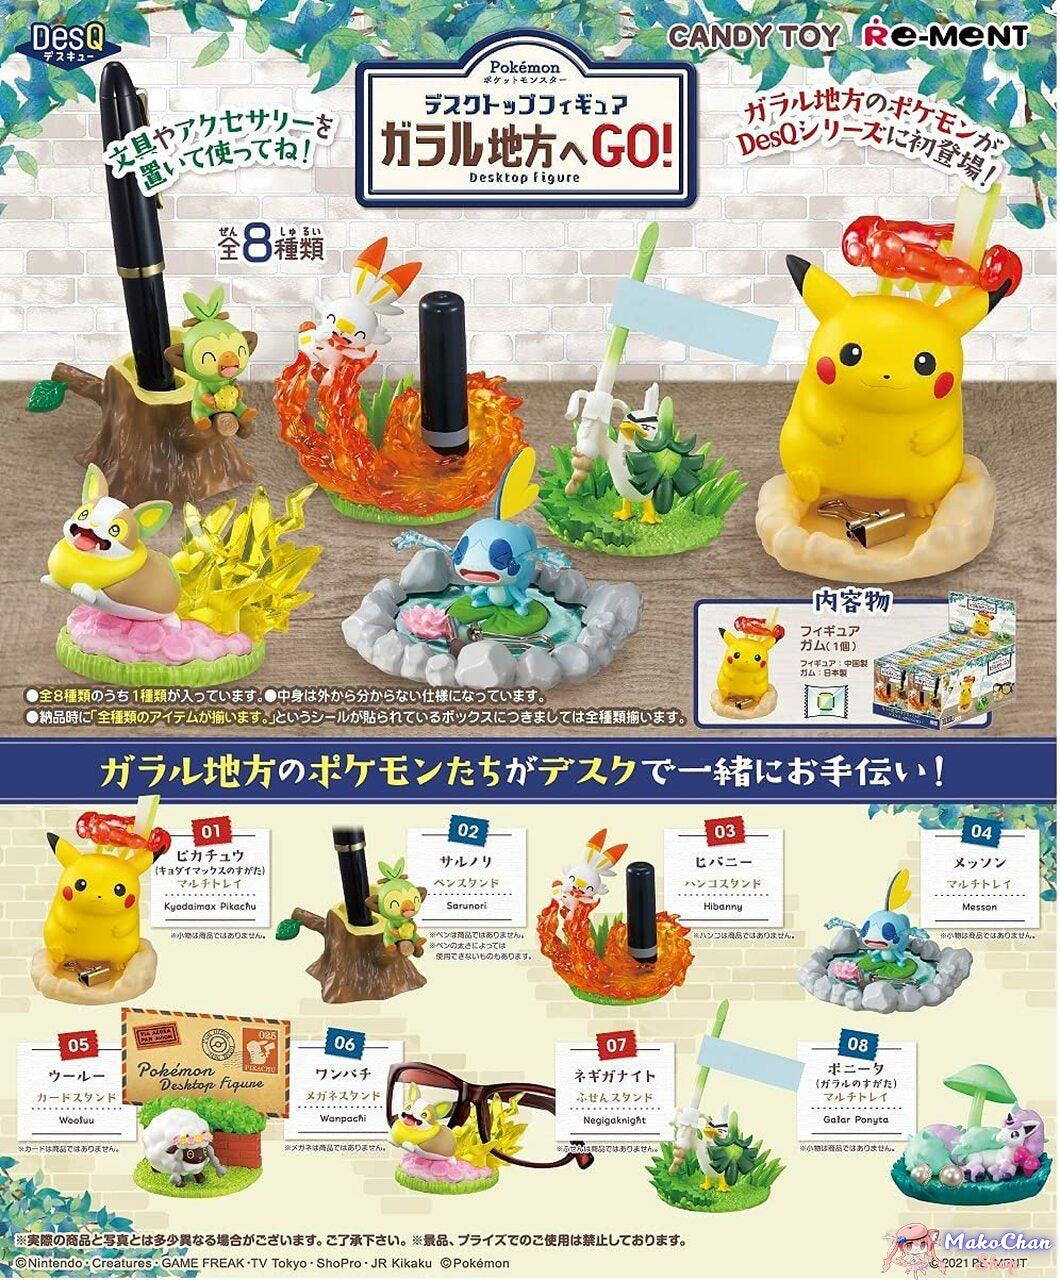 Re-Ment Pokemon: DesQ Pokemon Desktop Figure - To the Galar Region! Makochan.store